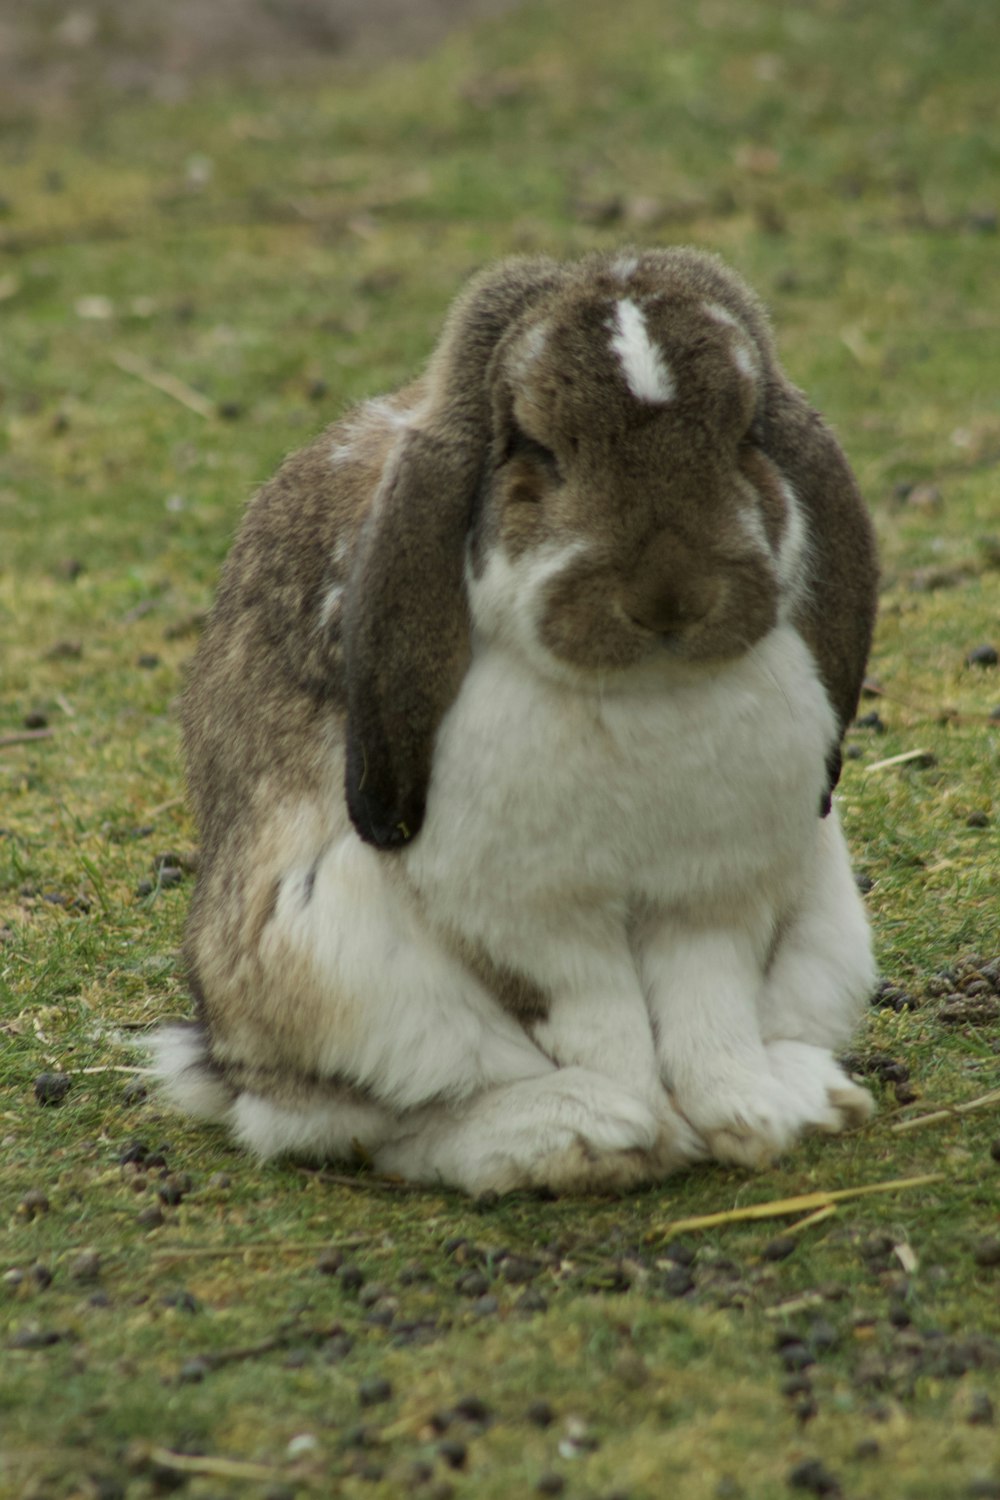 a rabbit sitting on grass